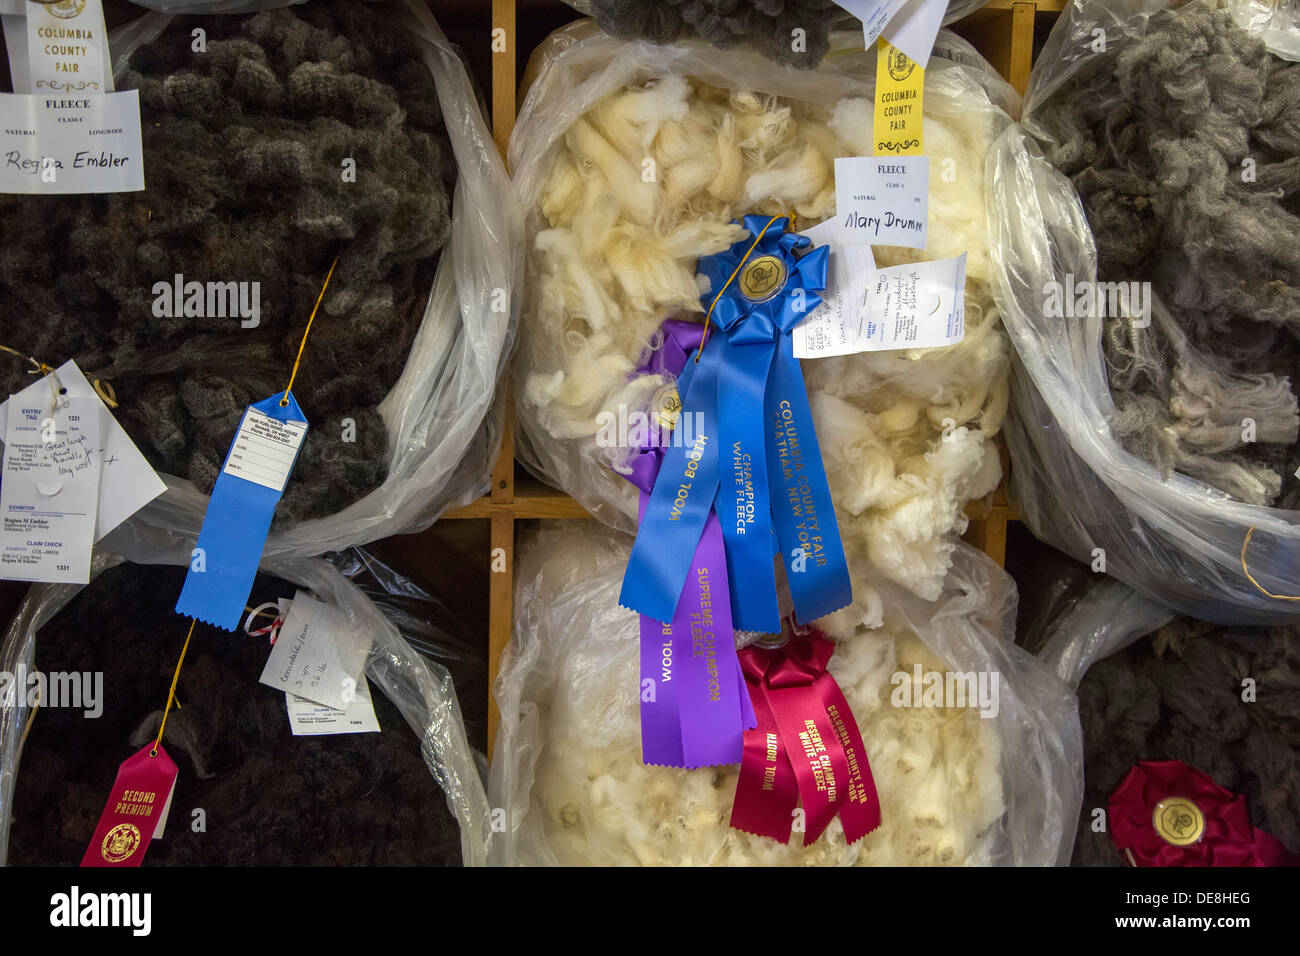 Chatham, New York - Prize-winning lana presso la Columbia County Fair. Foto Stock